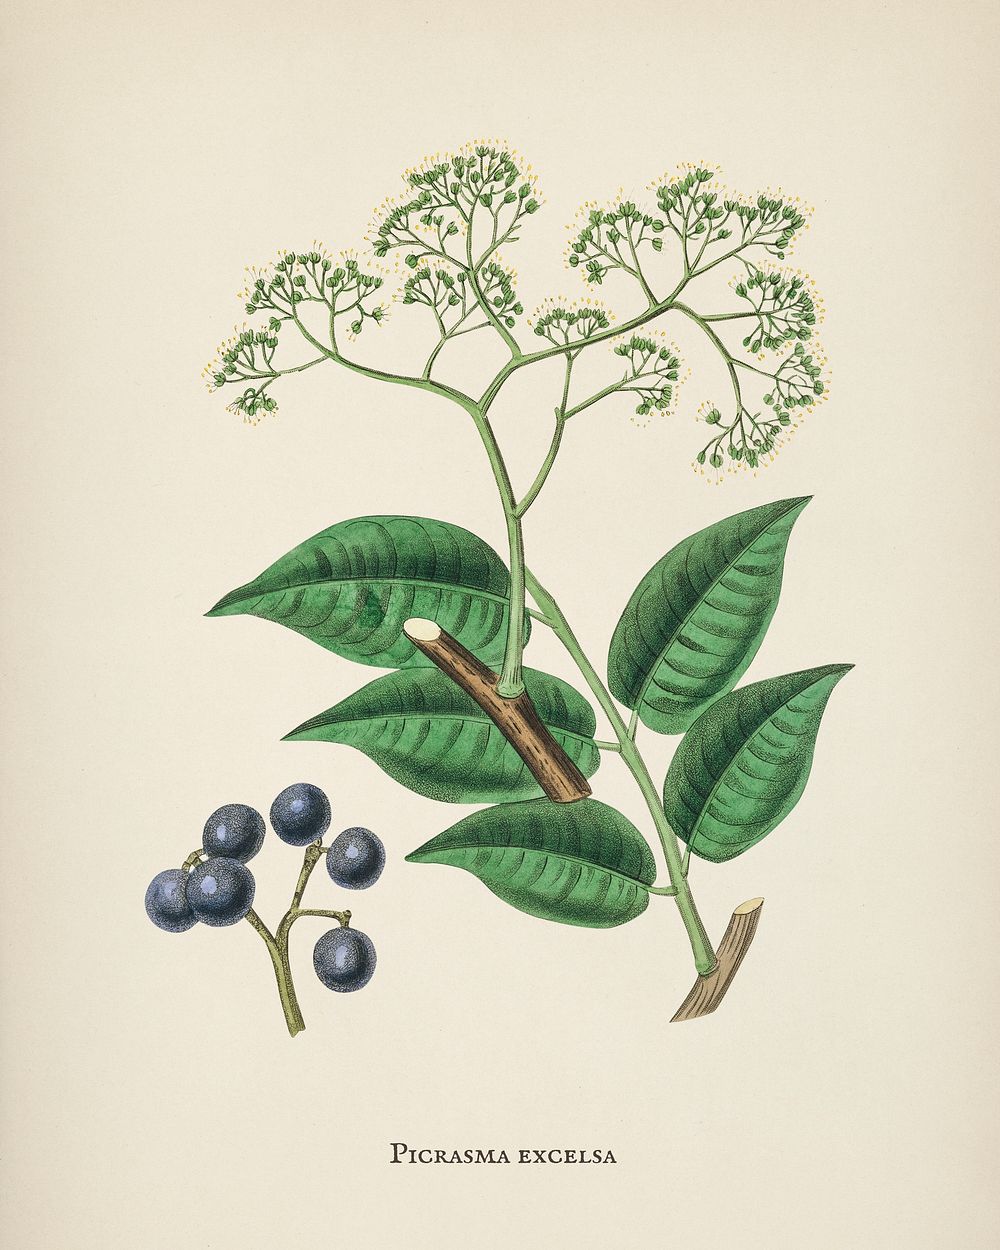 Picrasma excelsa illustration from Medical Botany (1836) by John Stephenson and James Morss Churchill.